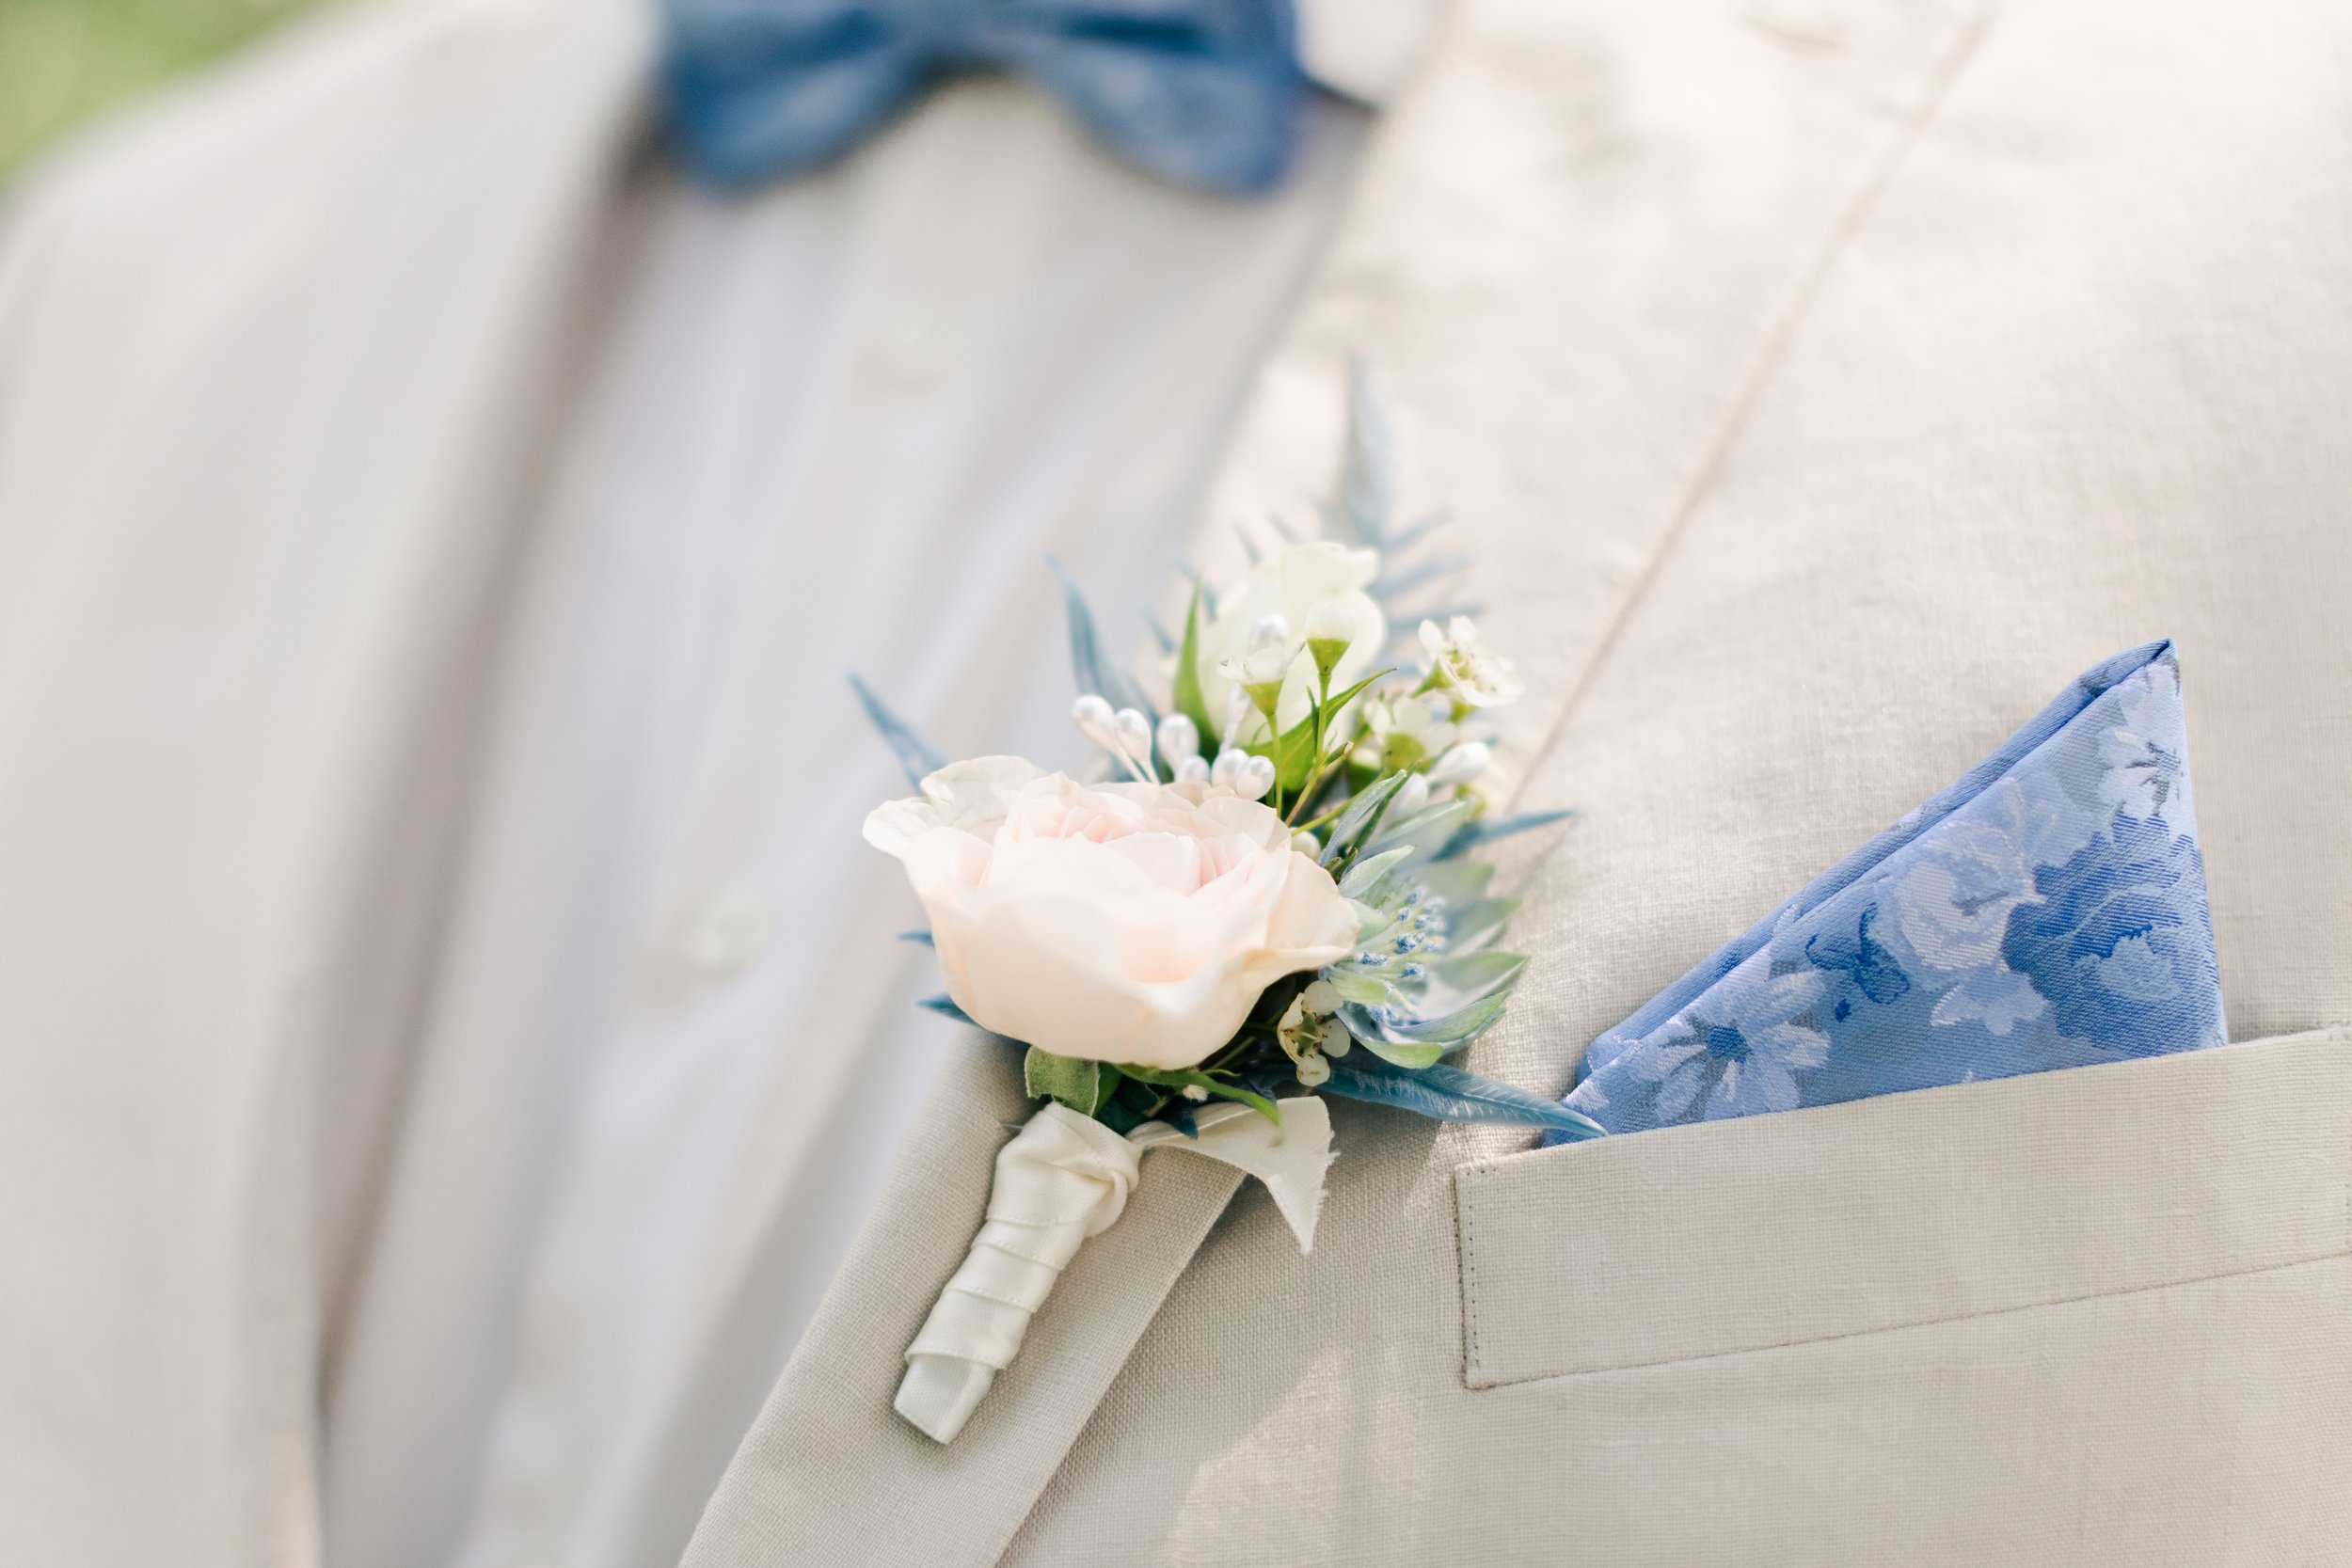 mens summer suit wedding flowers label pocket.jpg